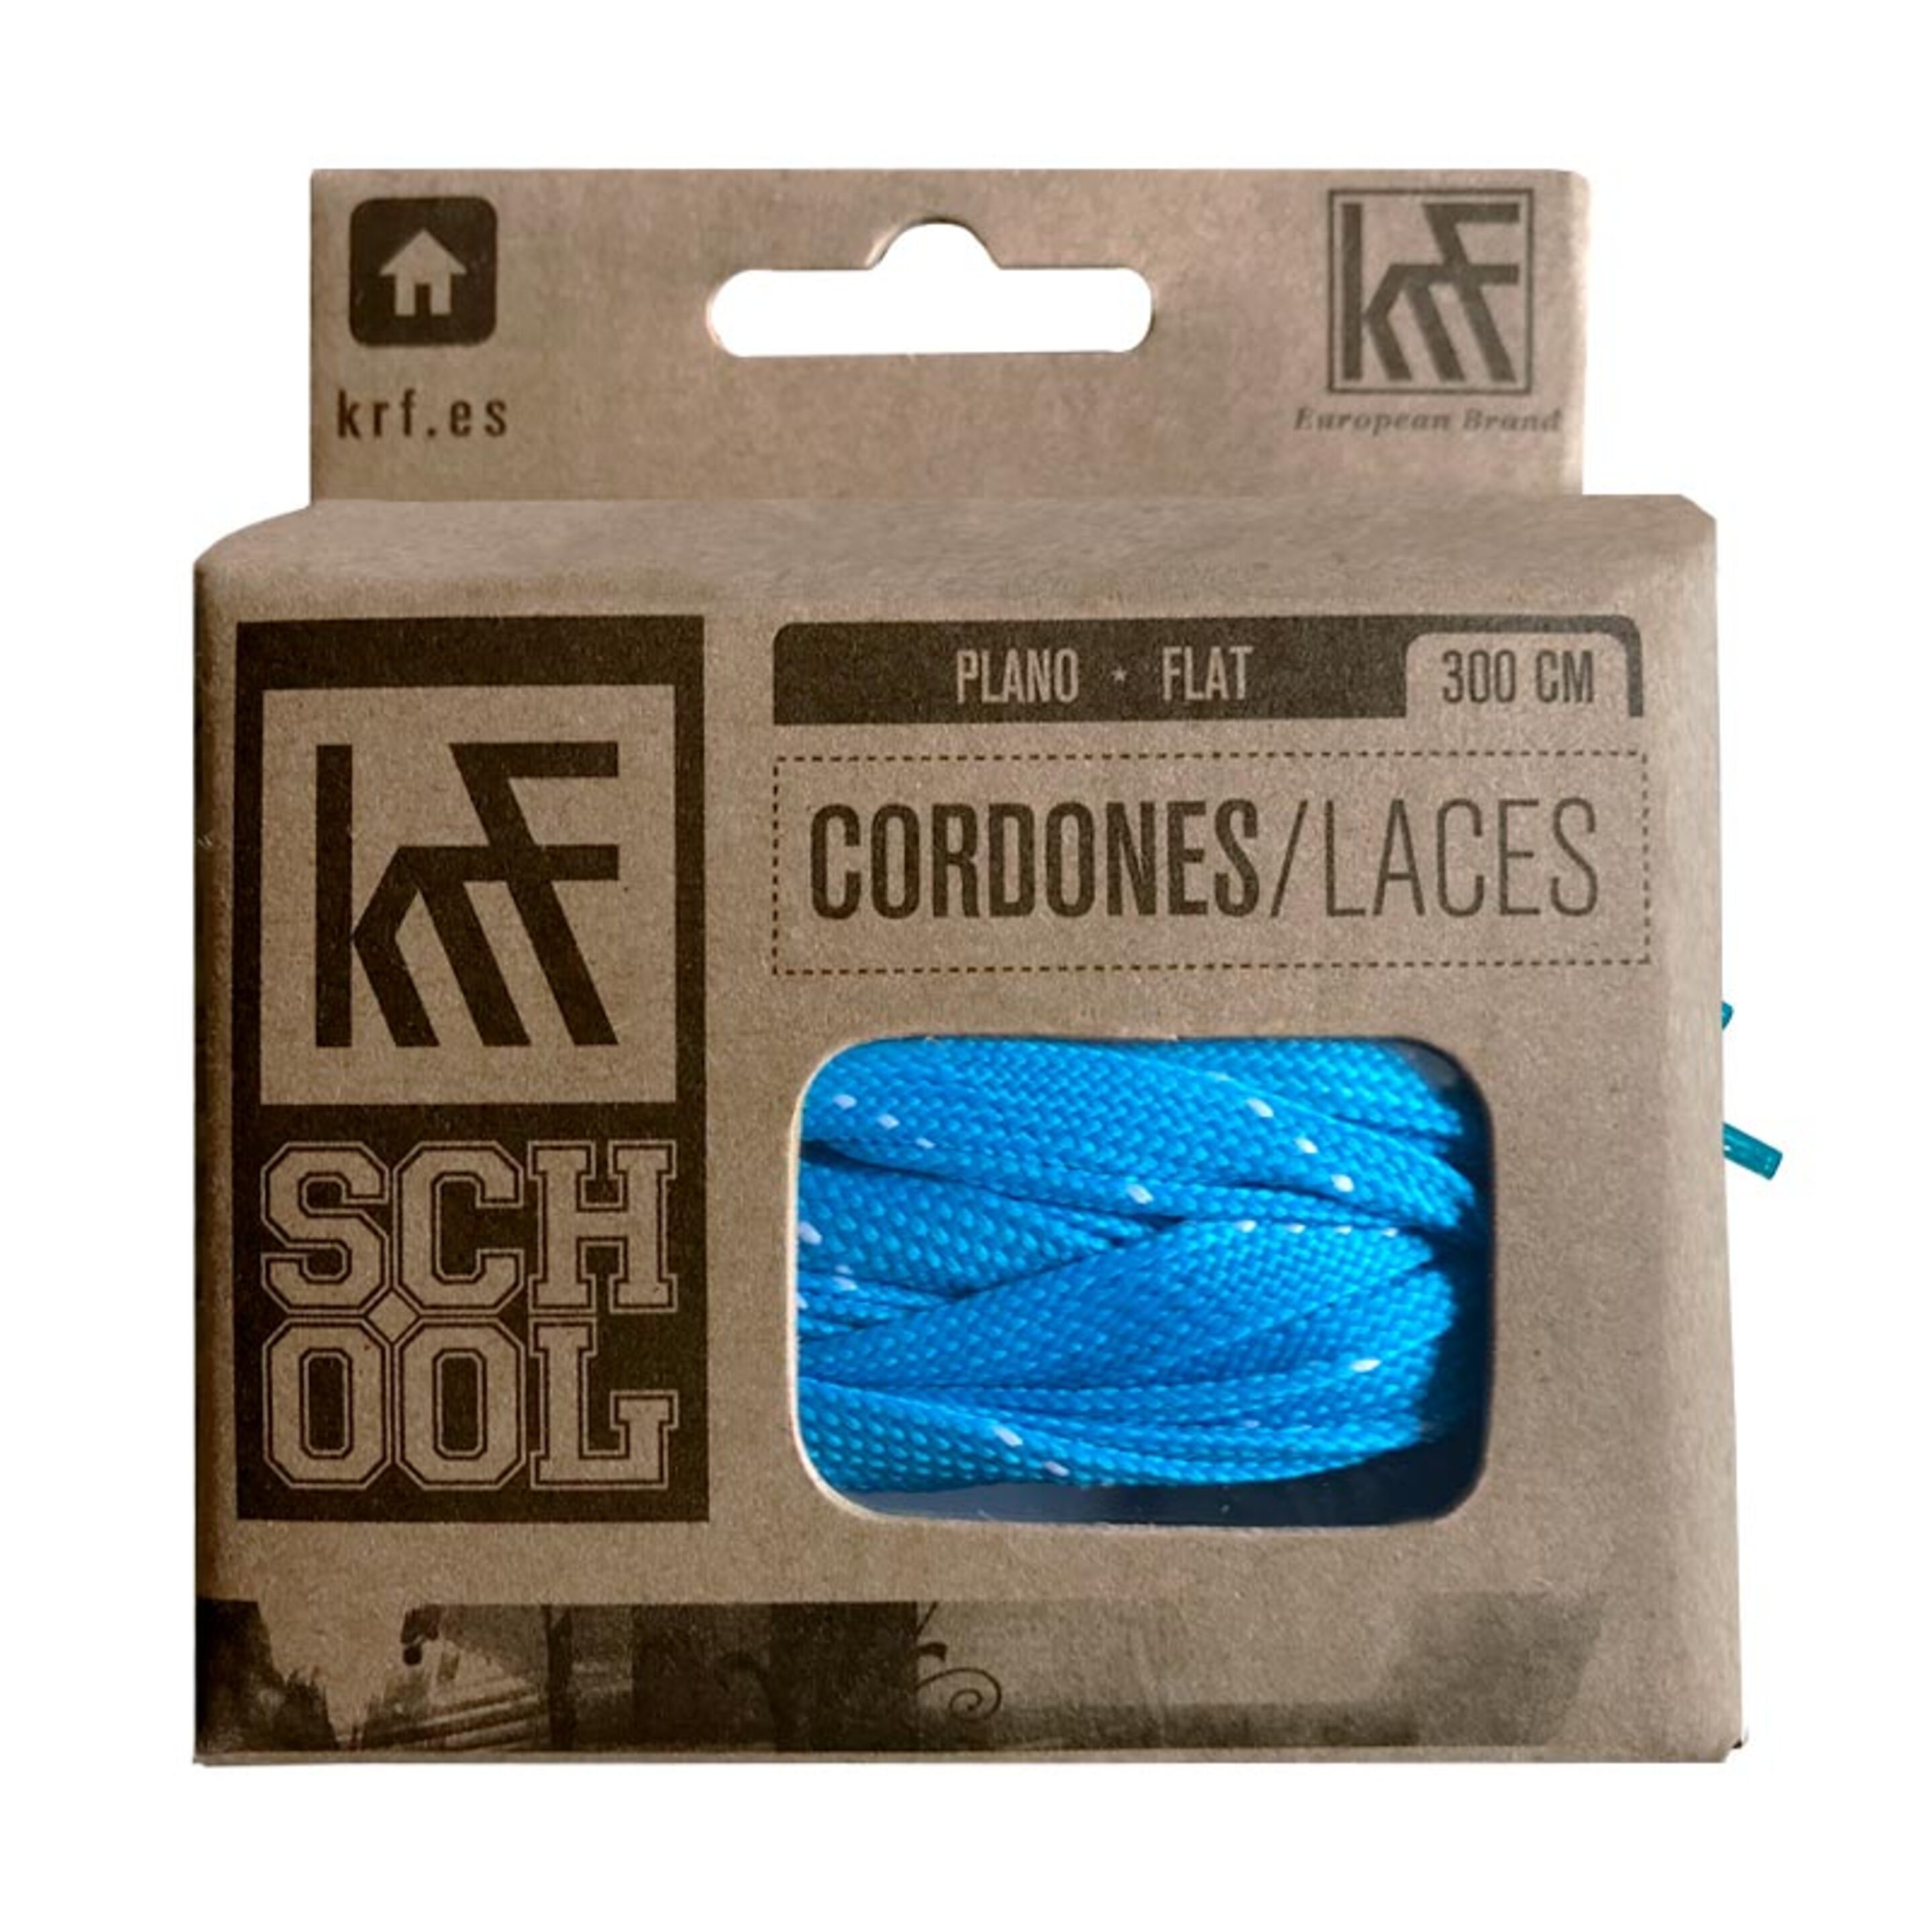 Des Krf Acc Pat Cordones Azul Plano 300cm